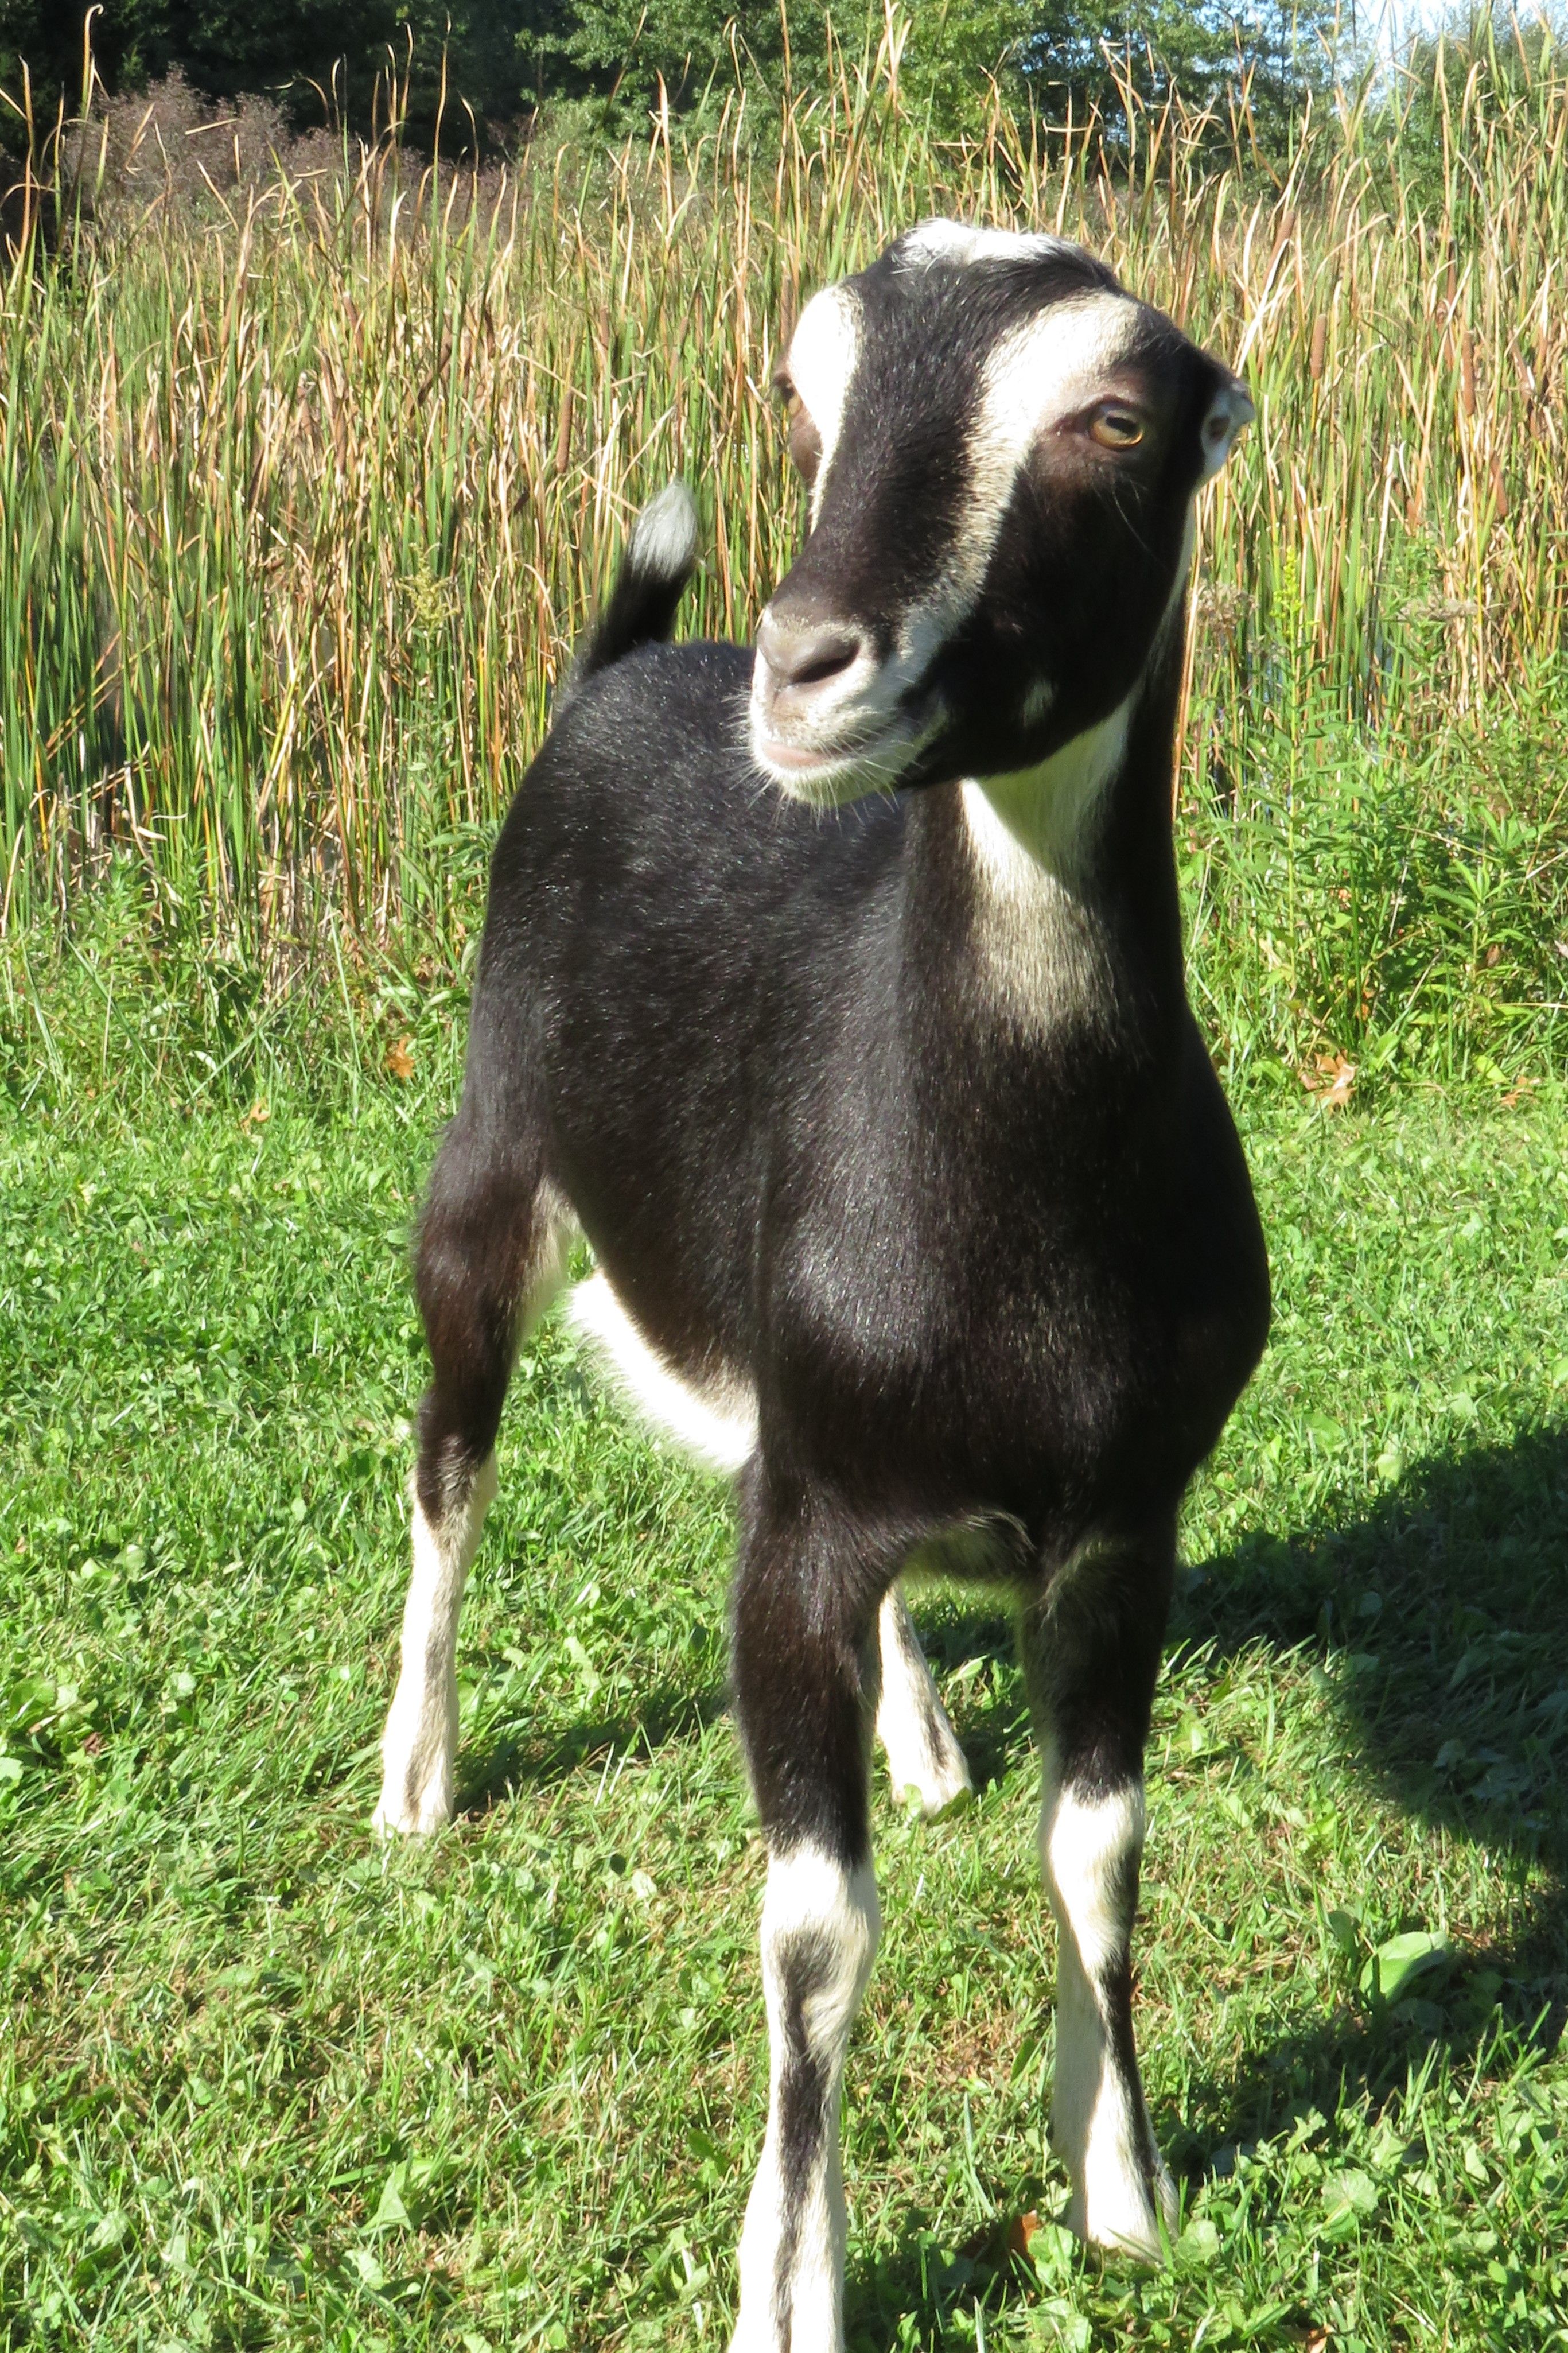 goat black and white